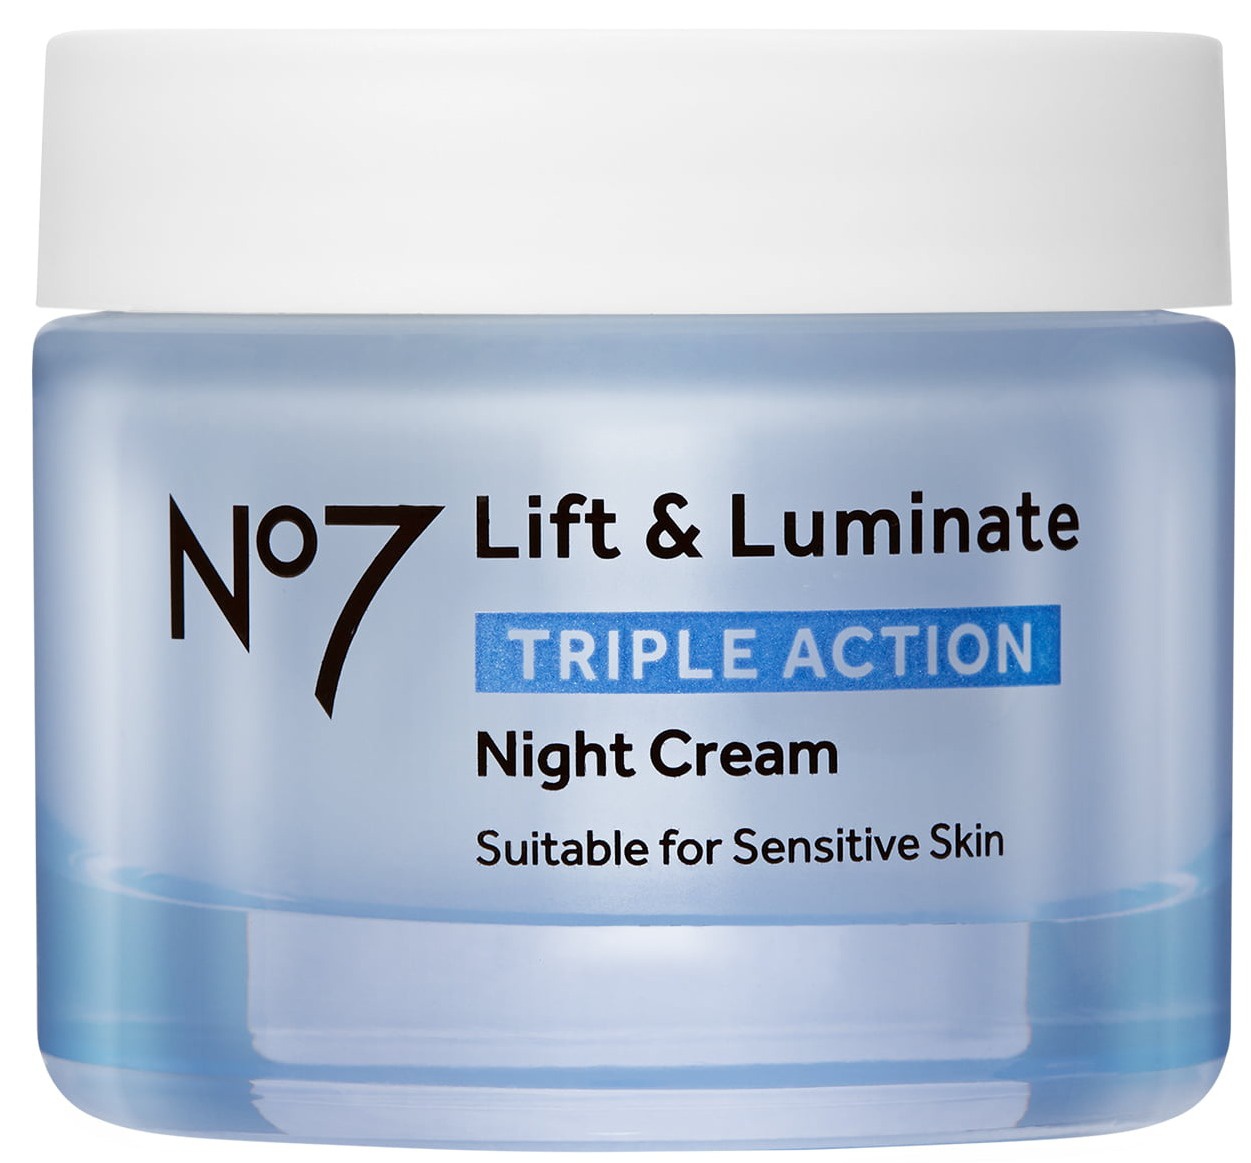 N°7 Lift & Luminate Triple Action Night Cream